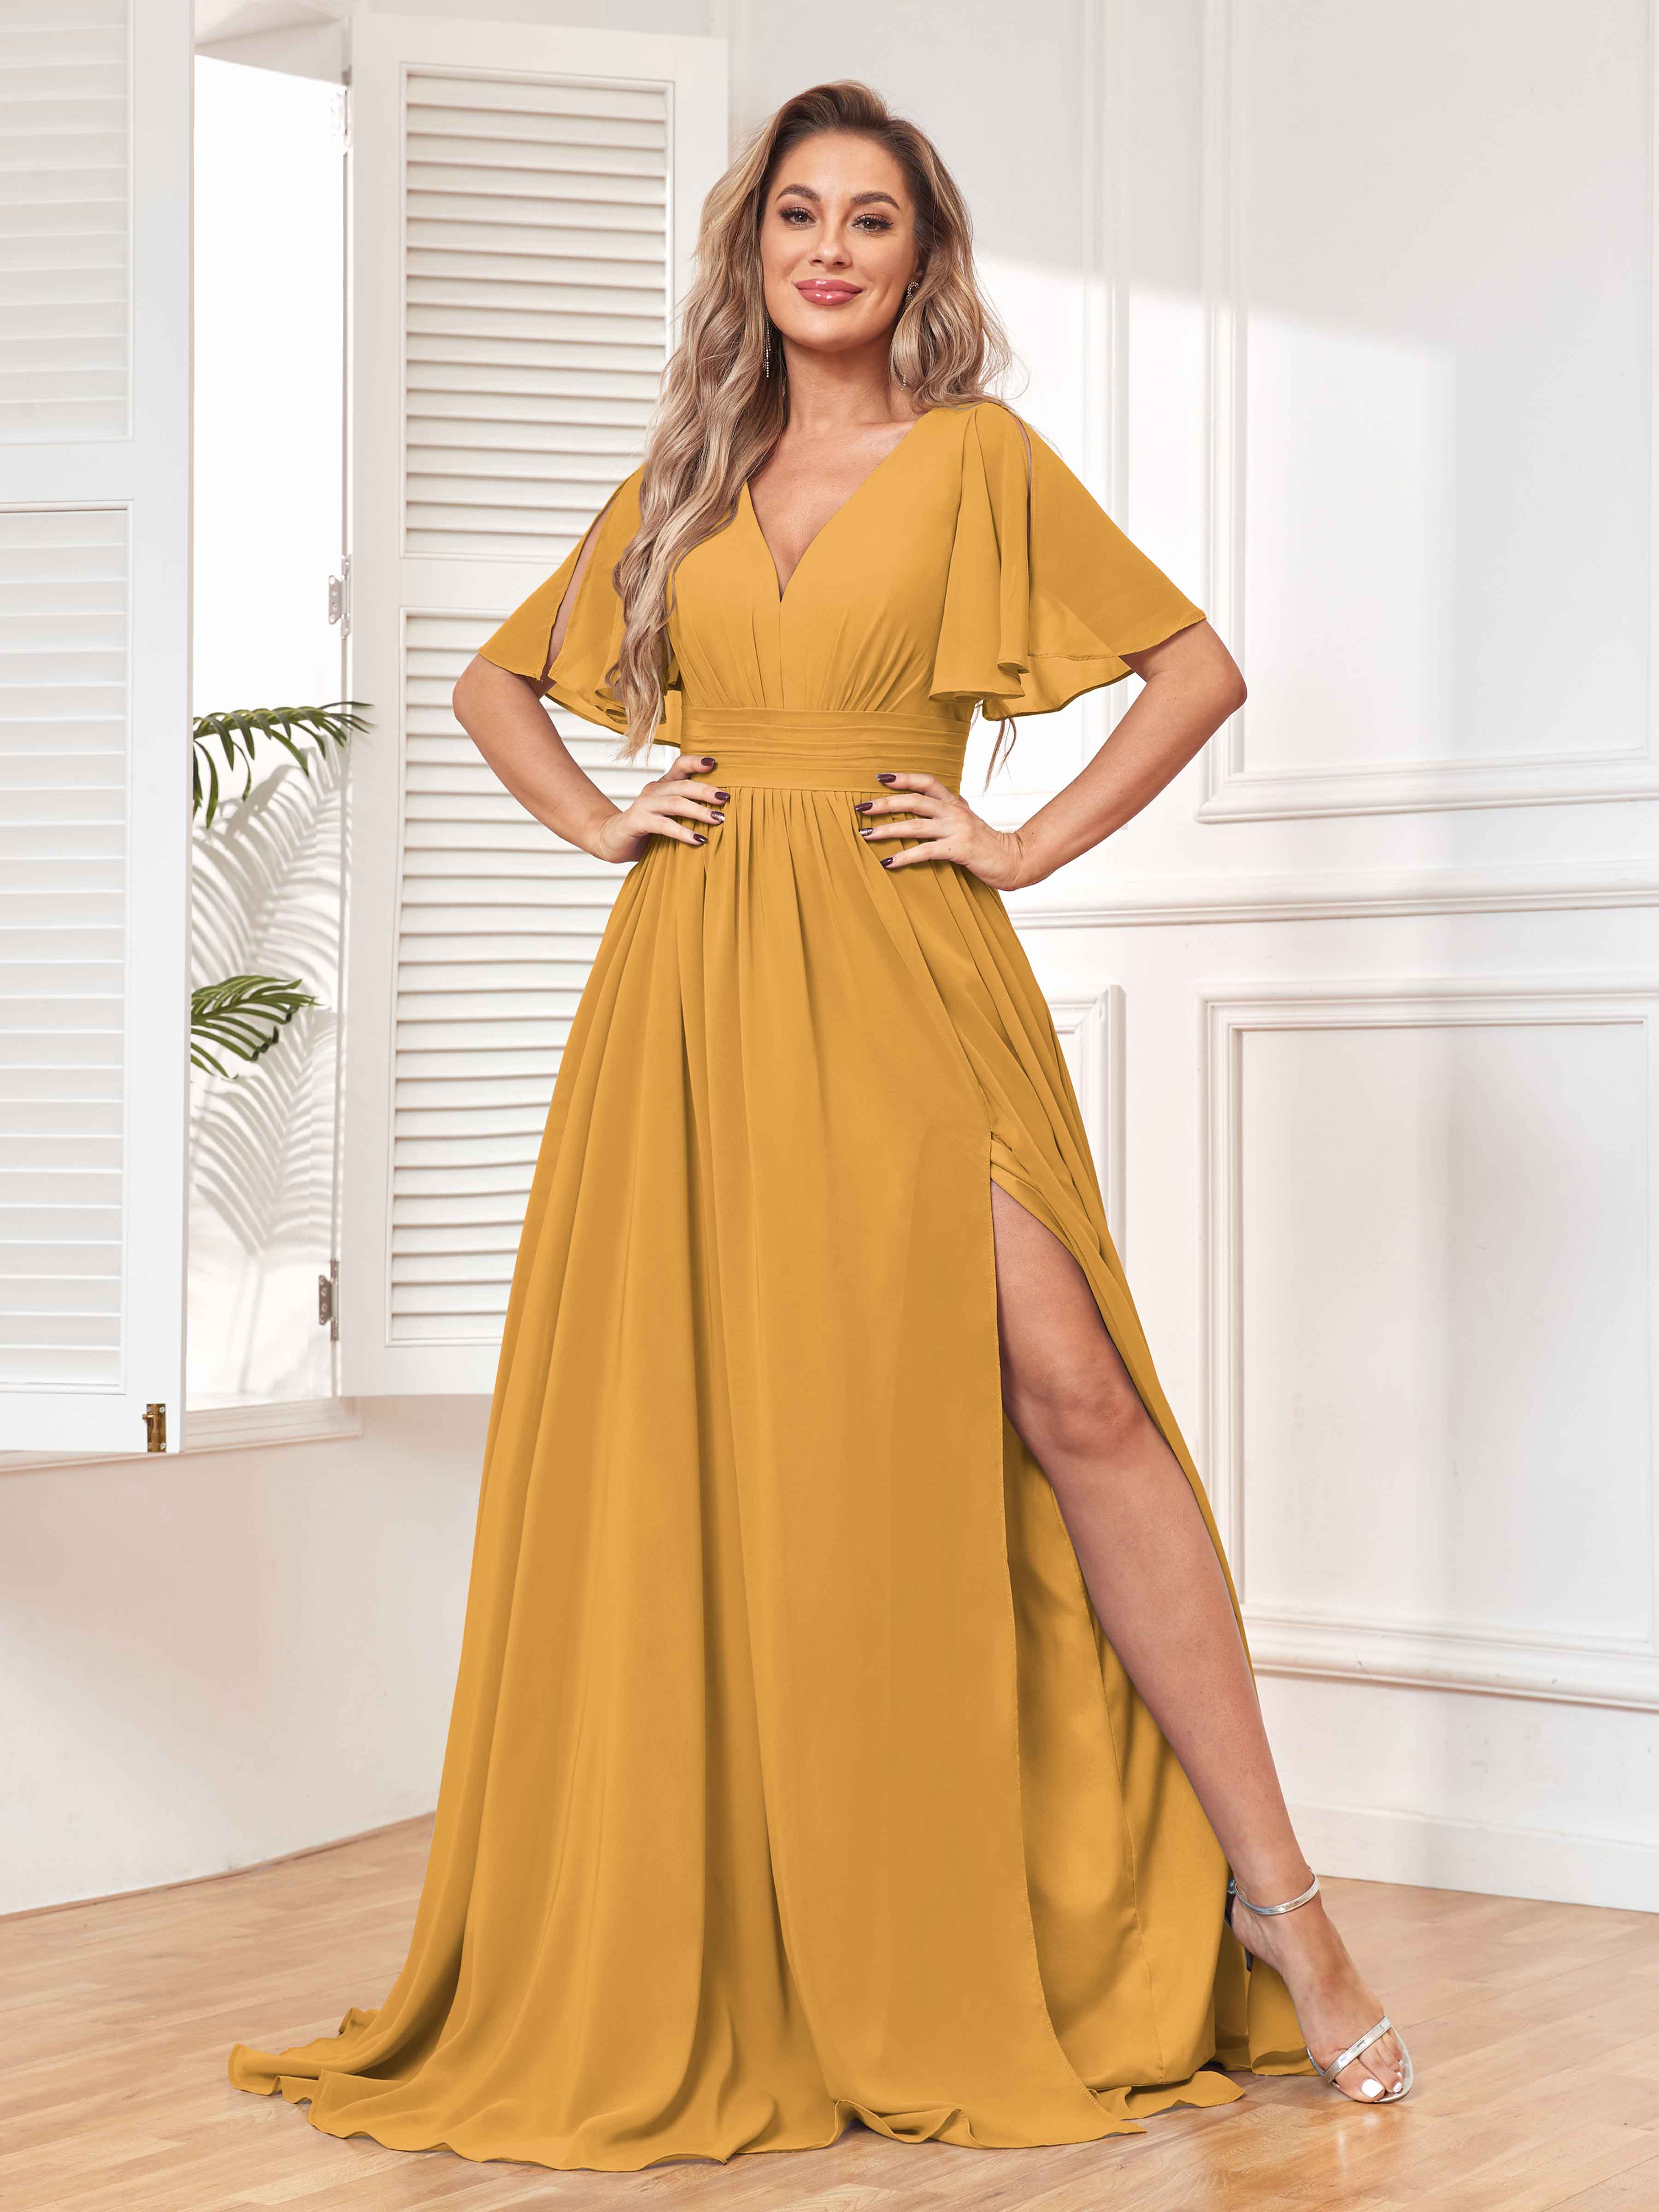 ISO Marfa Dress in Yellow Laurel Canyon Rose or Blue Laurel Canyon Rose,  size XXL DM @bridgetbaldwin if selling! #doen #shopdoen #fors